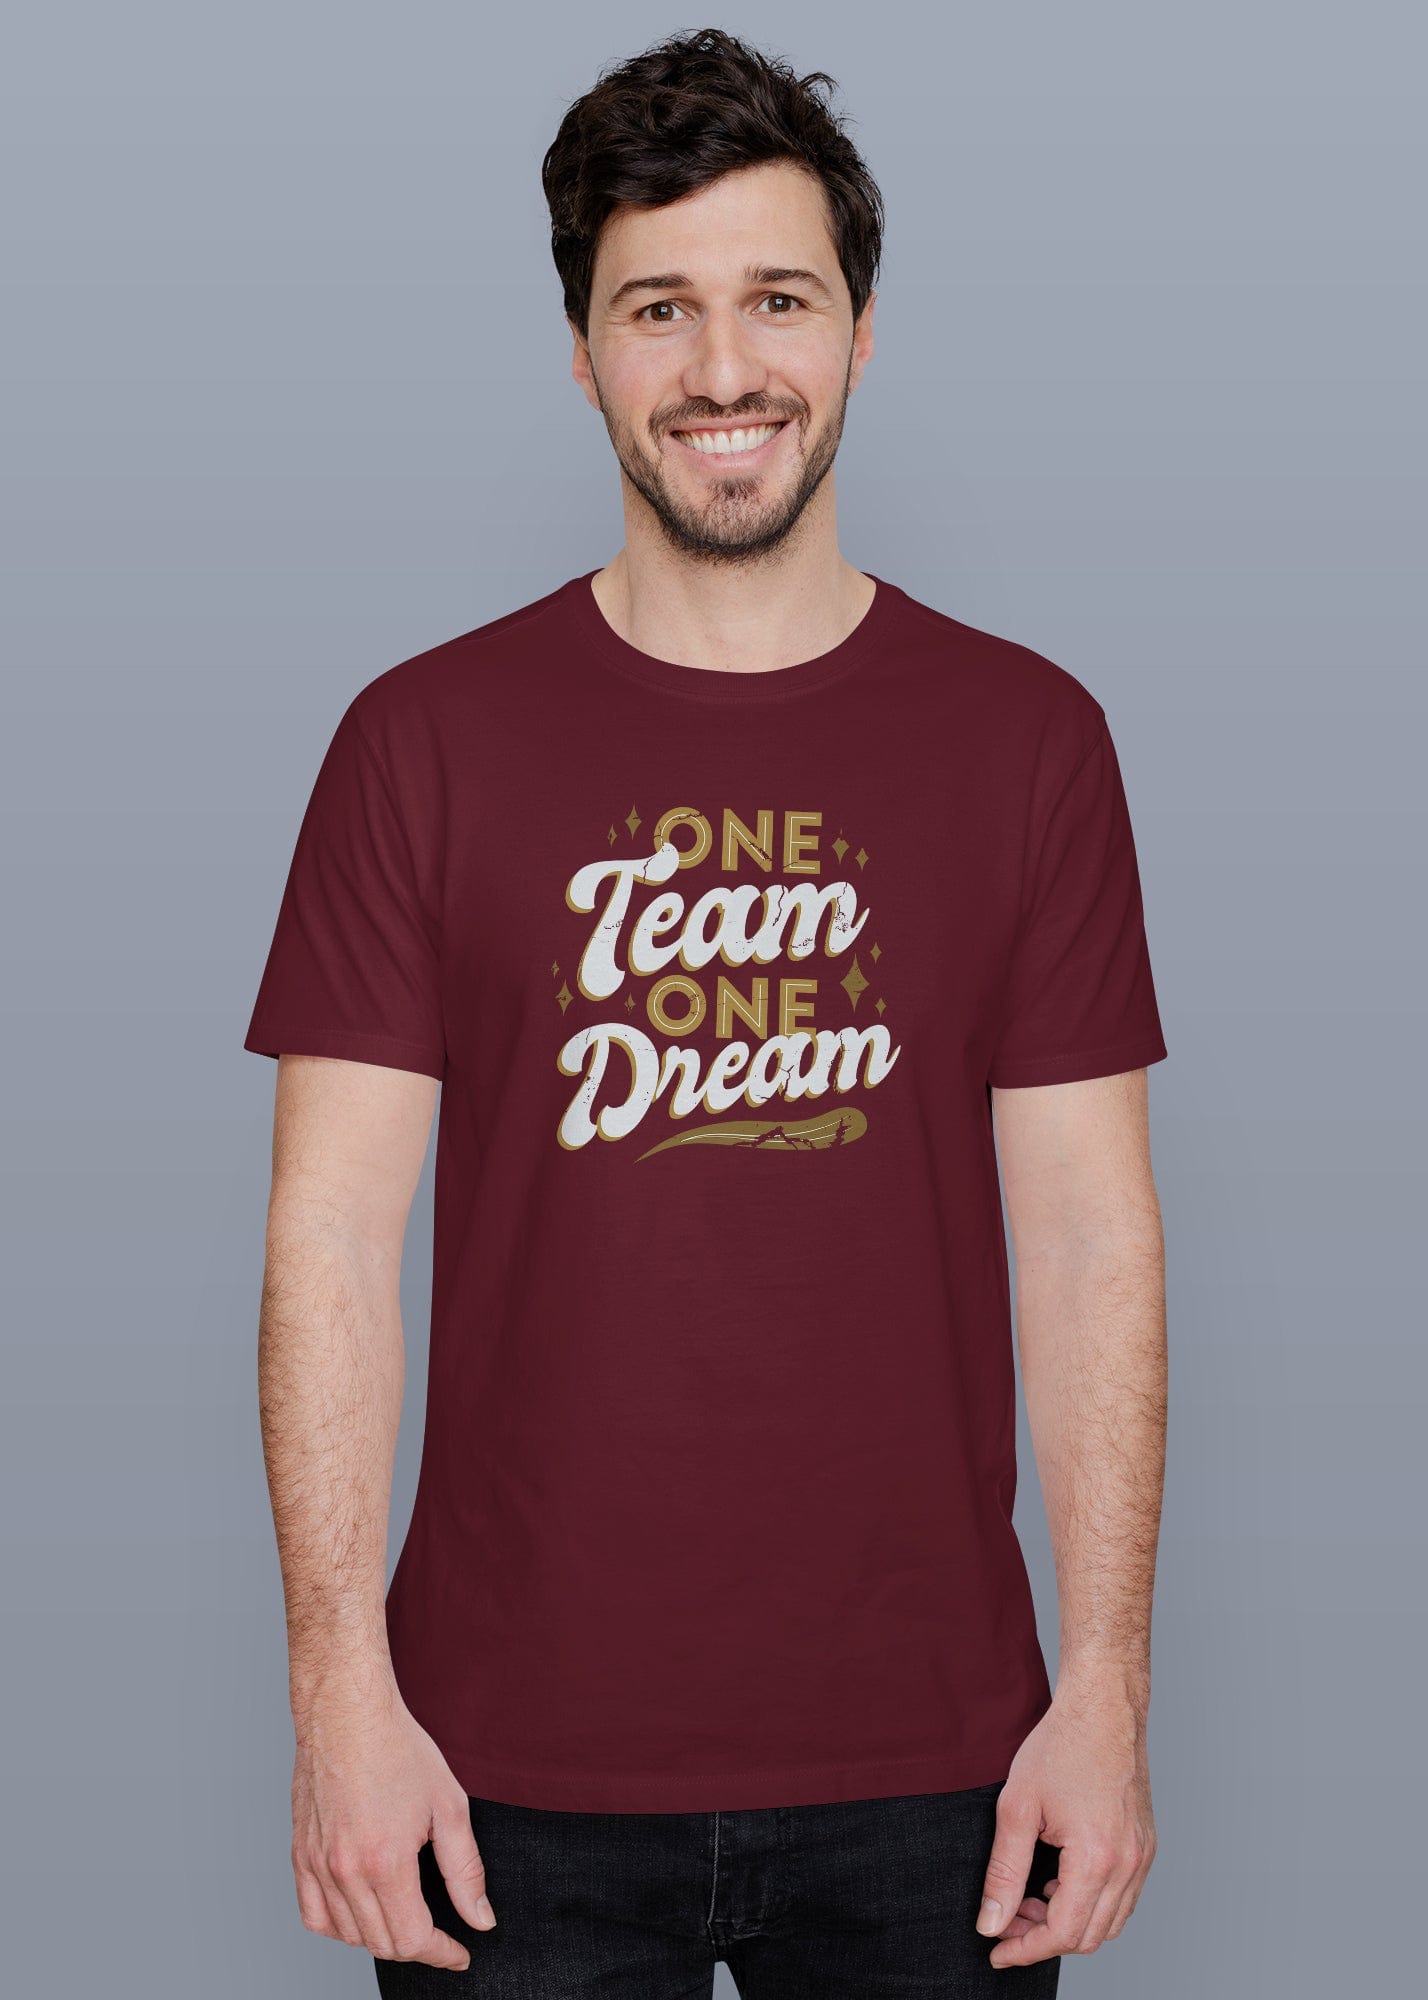 One Team One Dream Printed Half Sleeve Premium Cotton T-shirt For Men